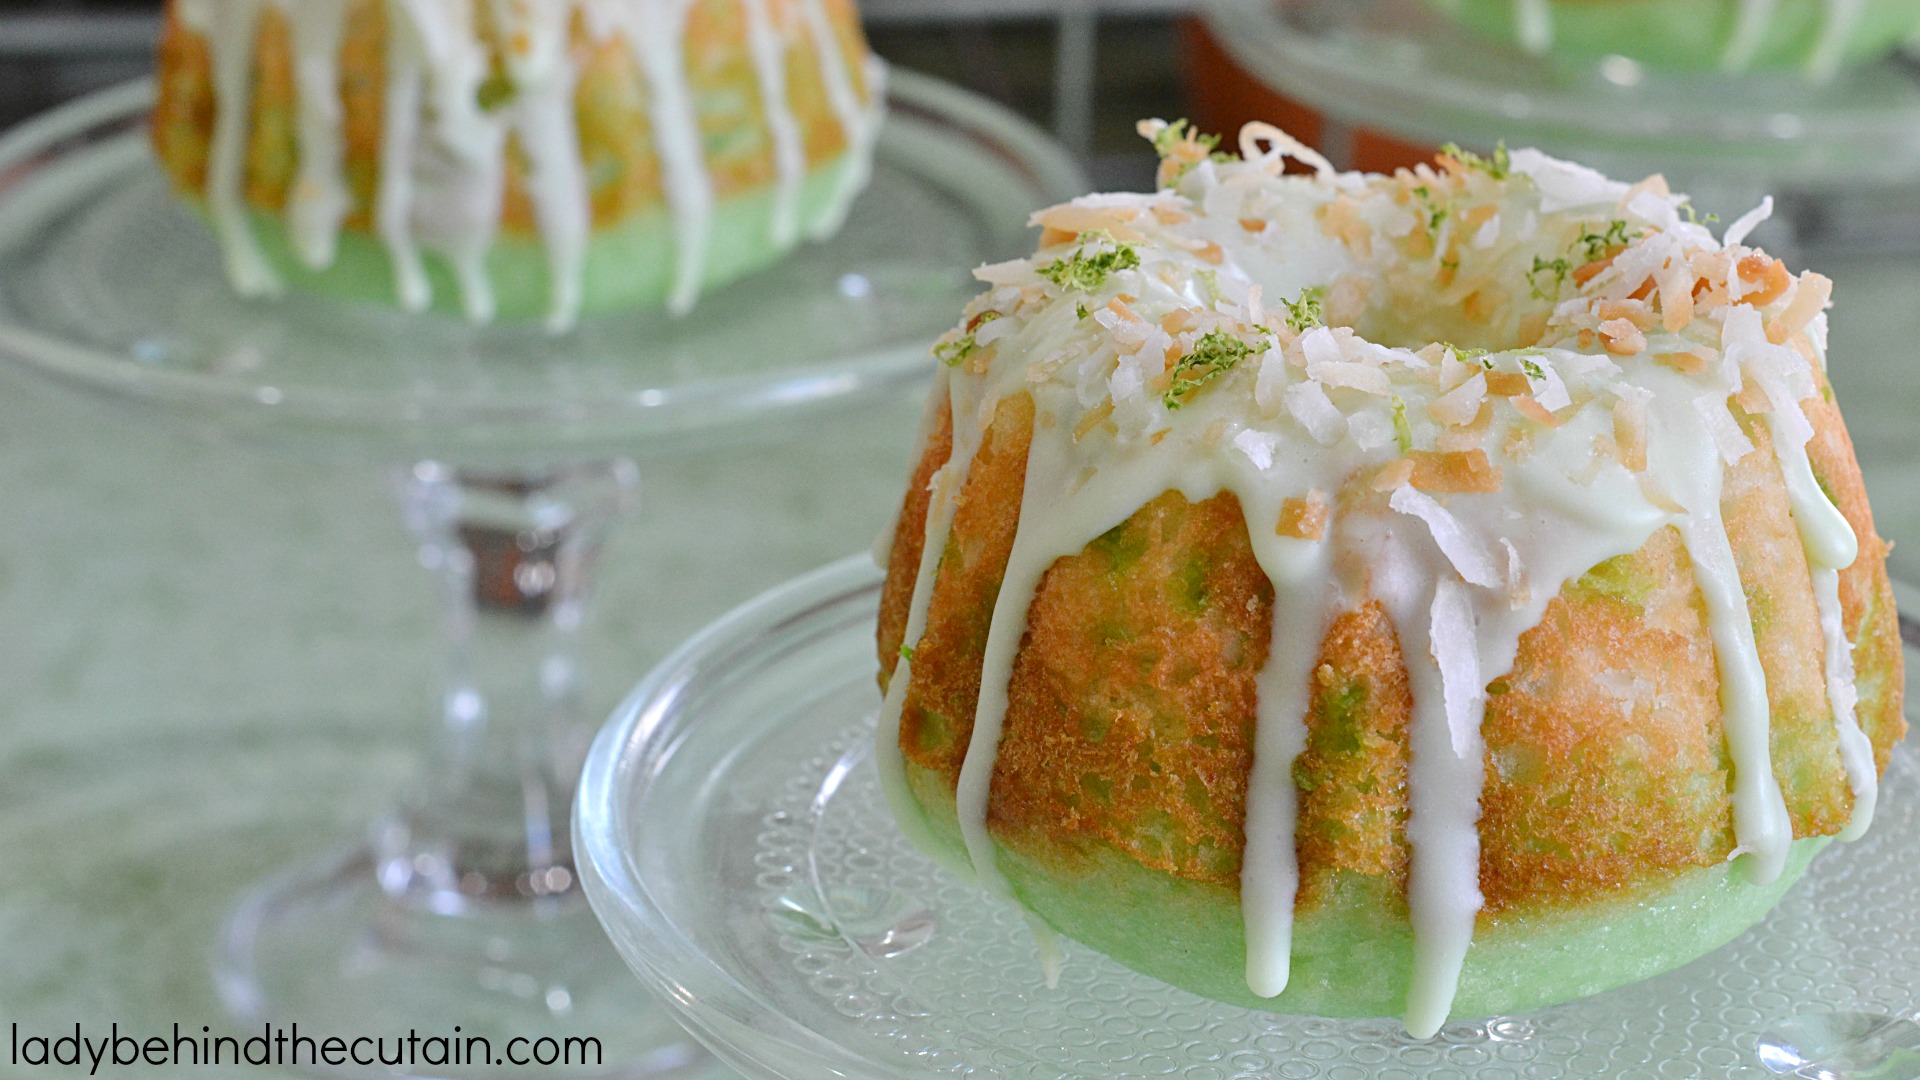 https://www.ladybehindthecurtain.com/wp-content/uploads/2019/03/Mini-Coconut-Lime-Bundt-Cakes-9.jpg